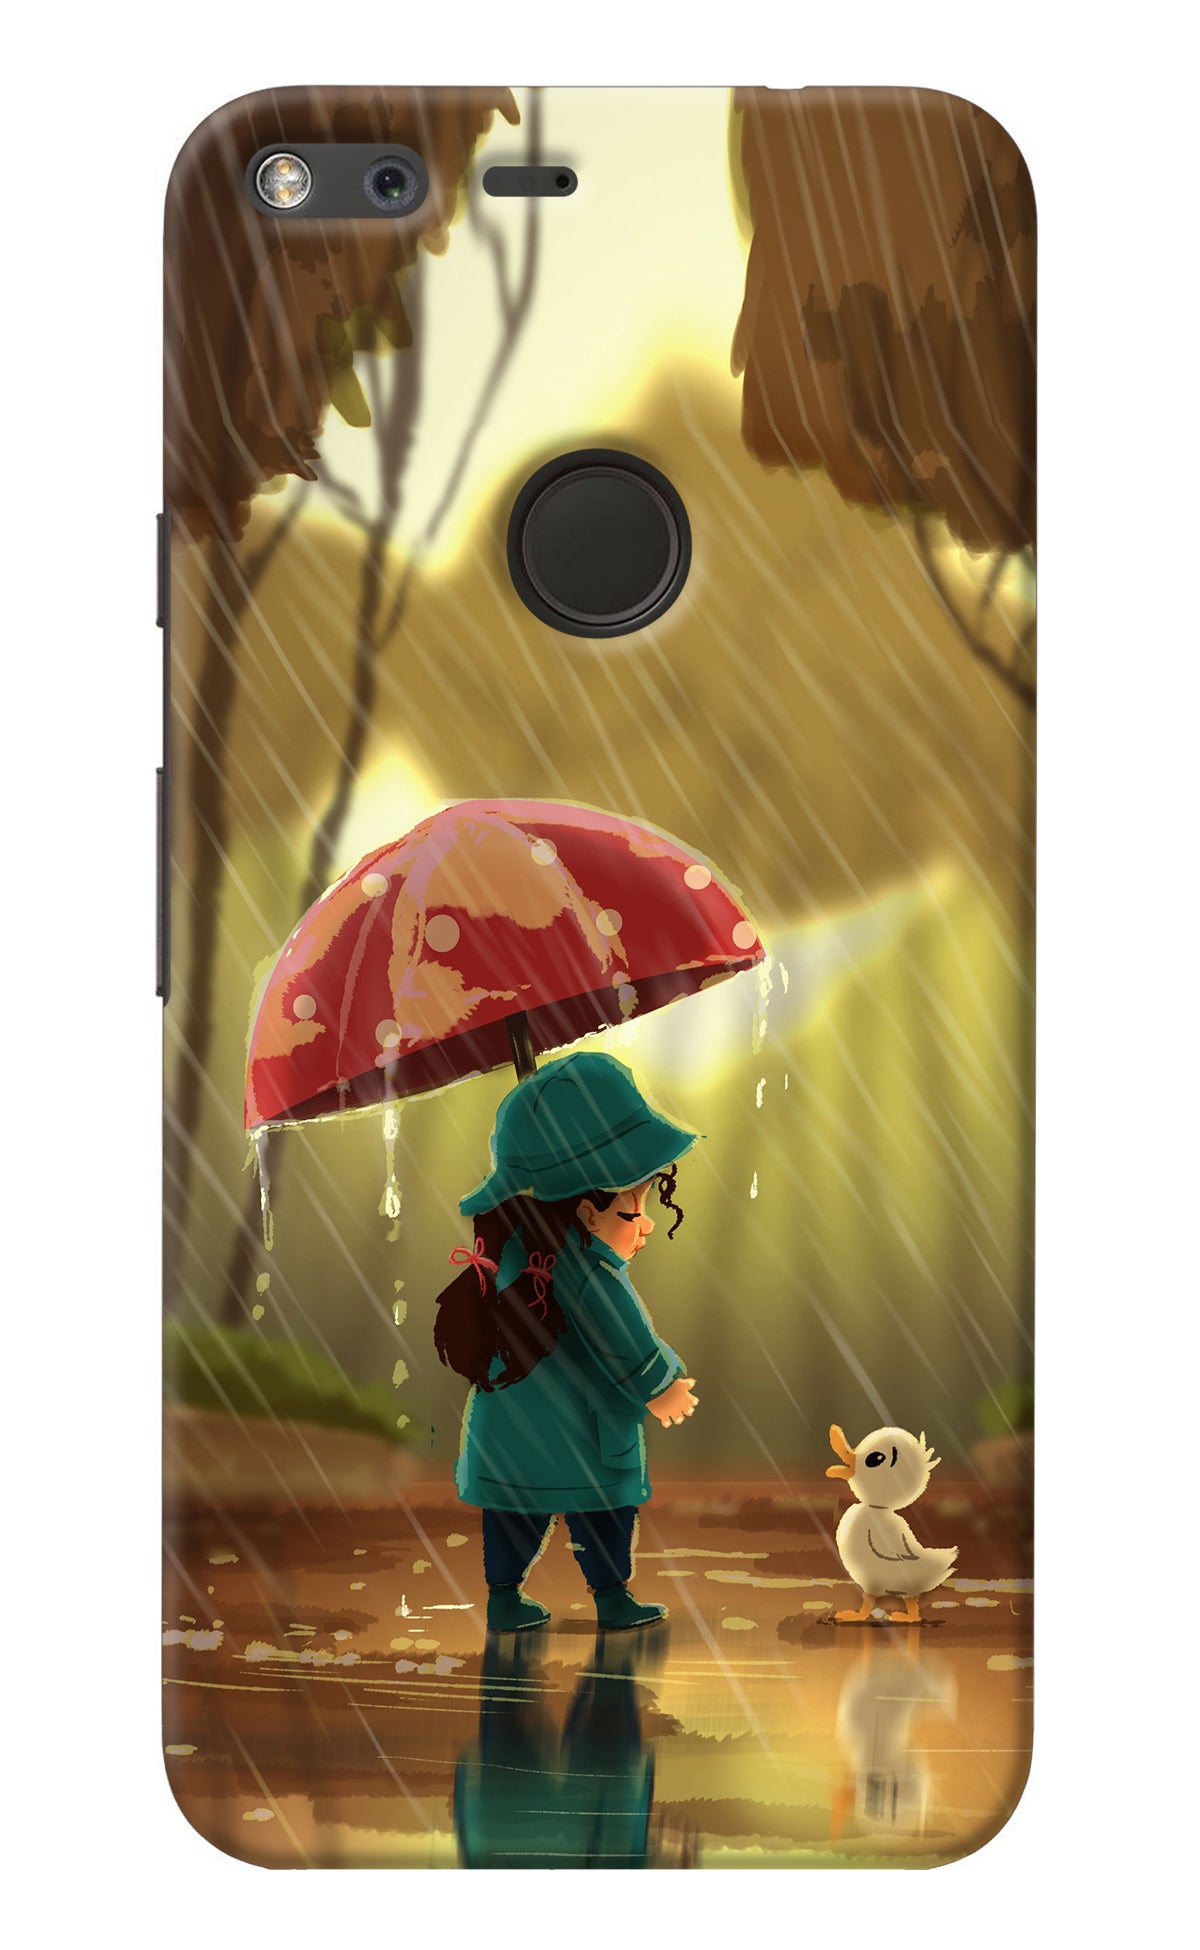 Rainy Day Google Pixel XL Back Cover